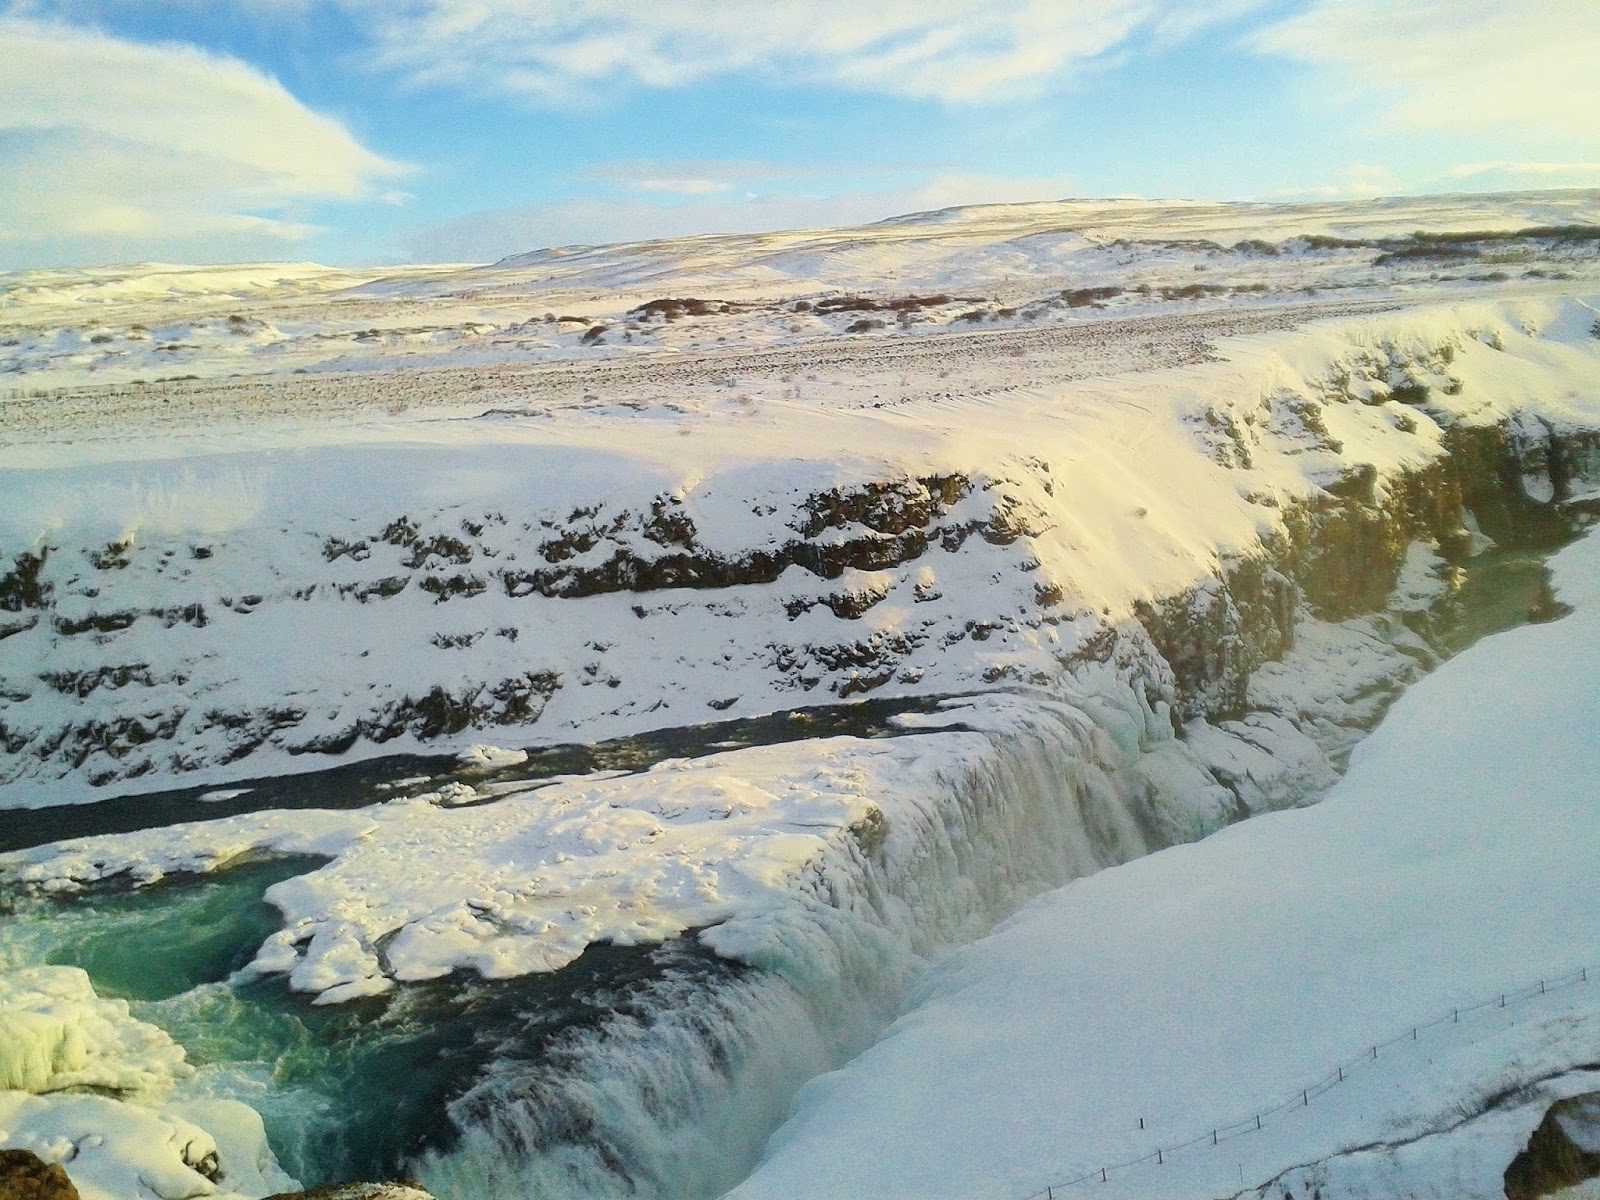 Iceland - Gullfoss Waterfall